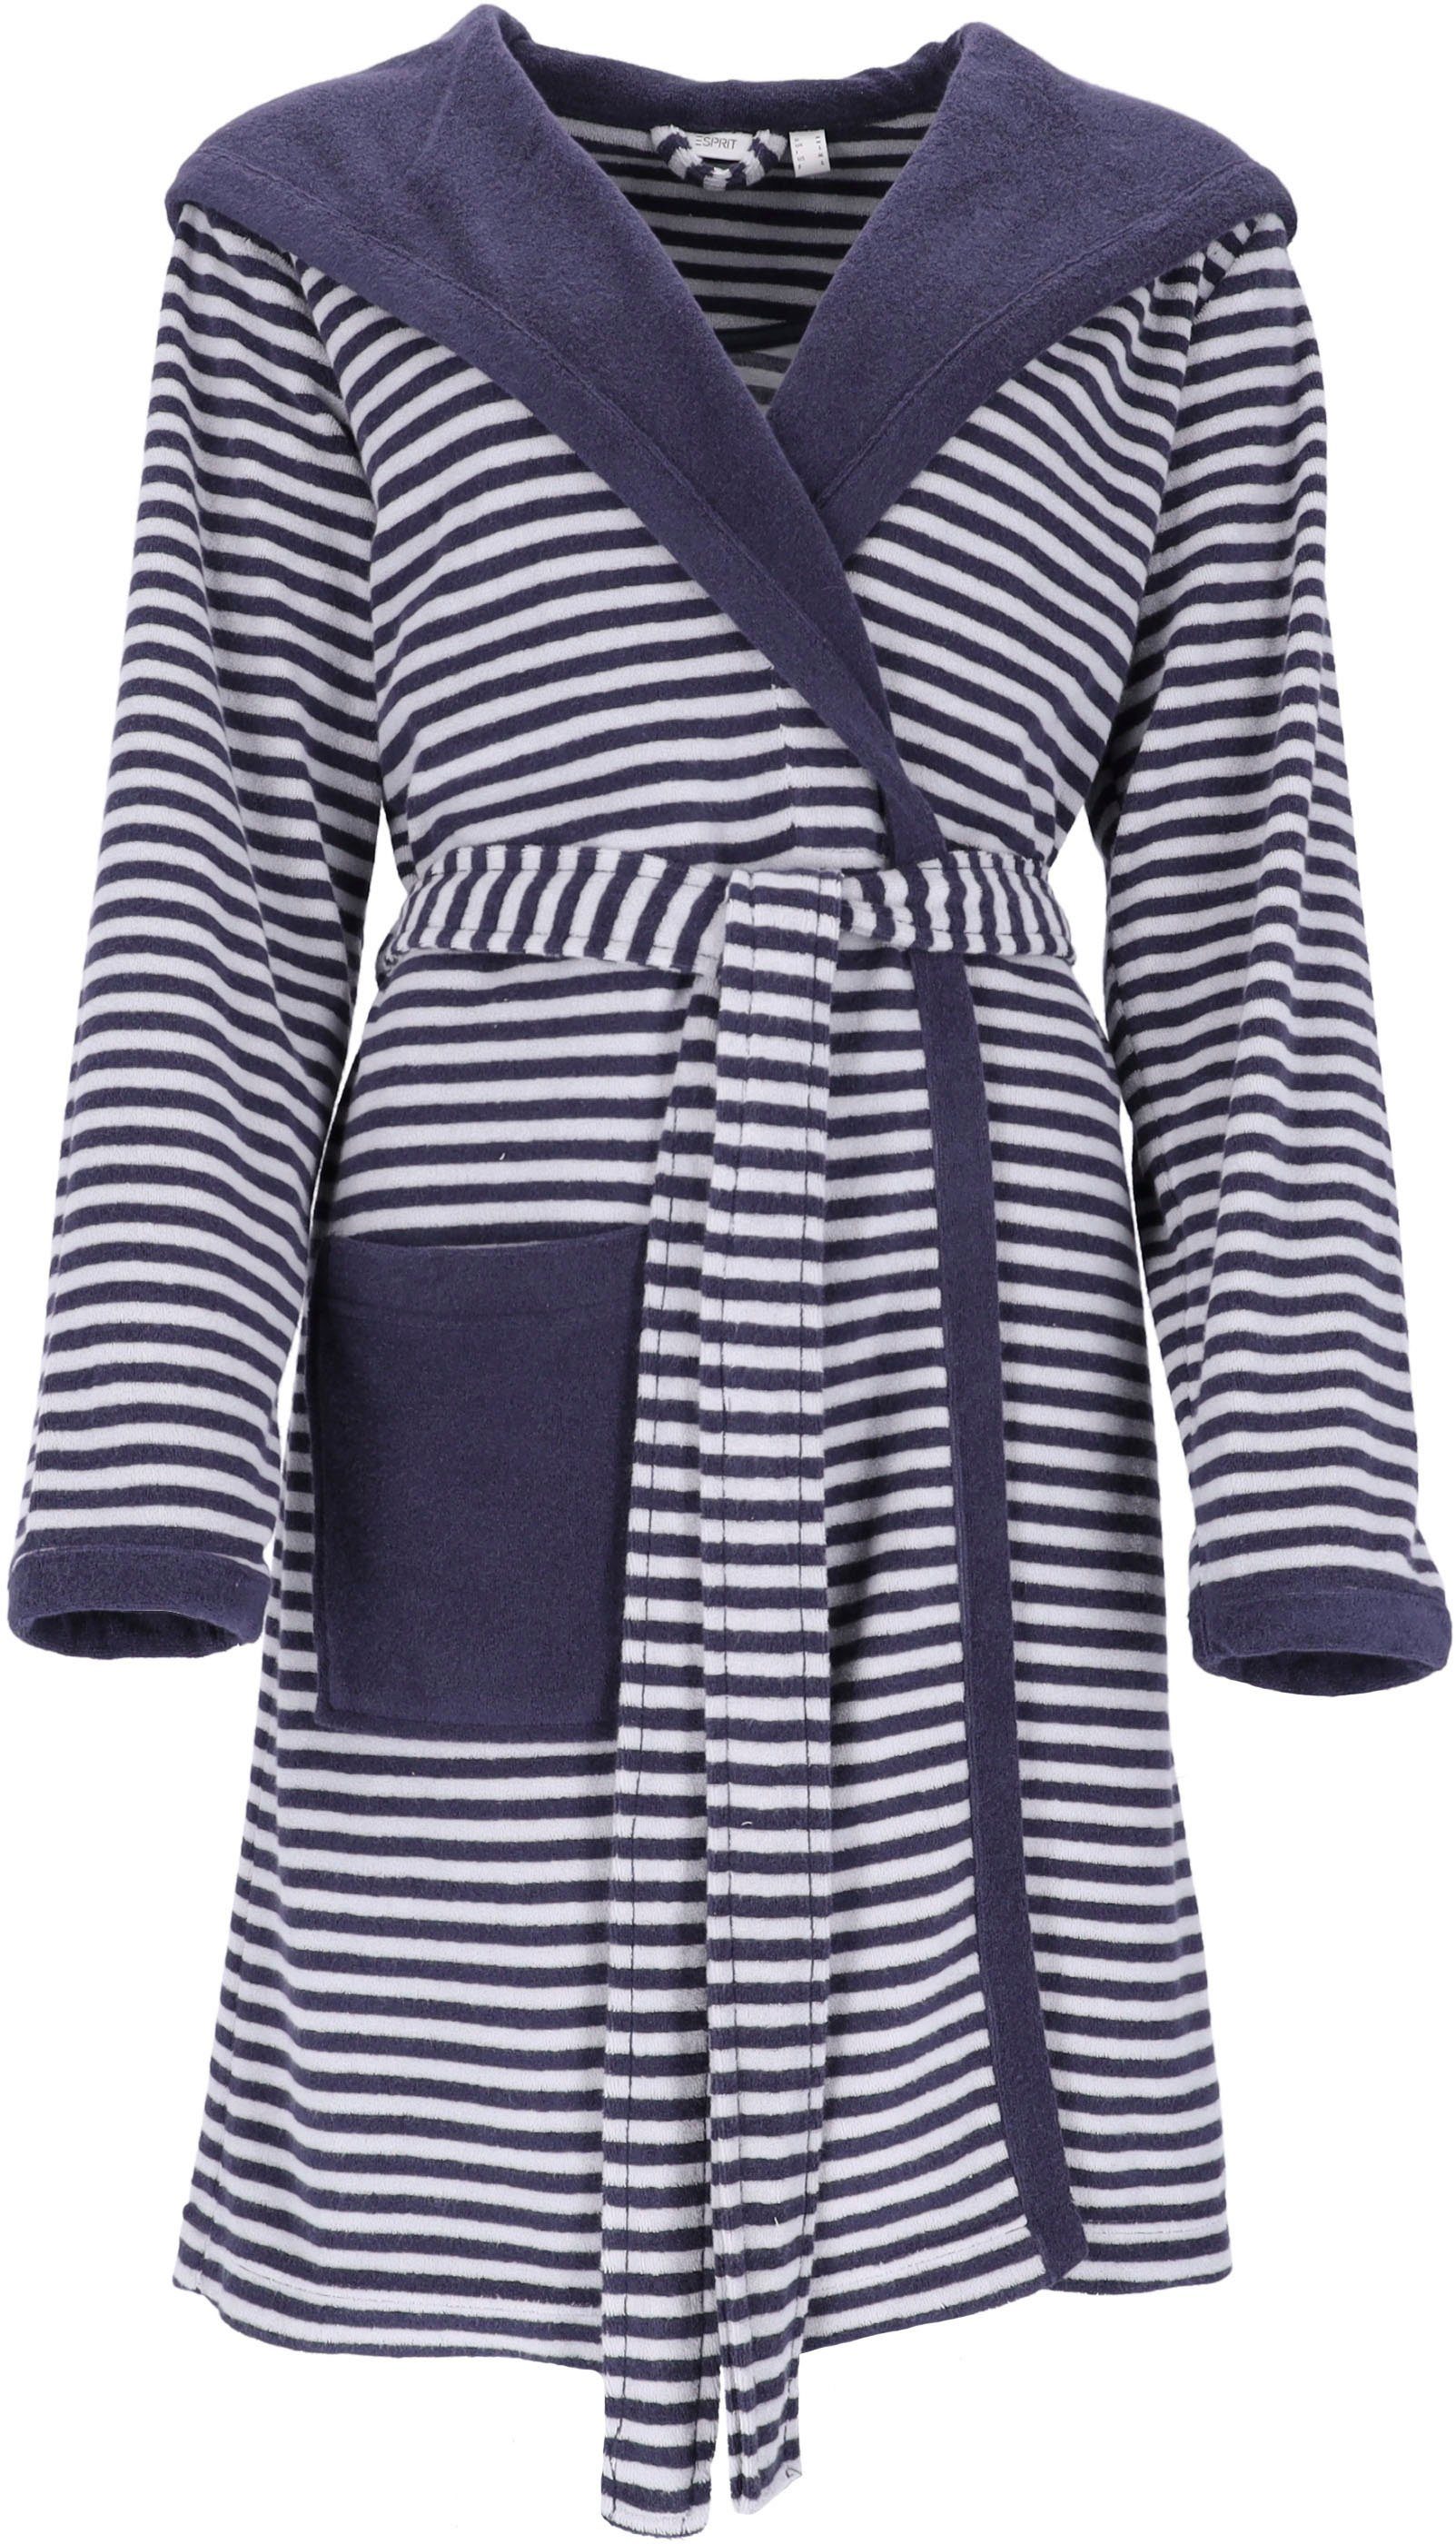 Esprit Damenbademantel Kaputze navy Gürtel, Kurzform, & Logostickerei, Kapuze, Striped mit Hoody, Jersey, kurz gestreift, blue